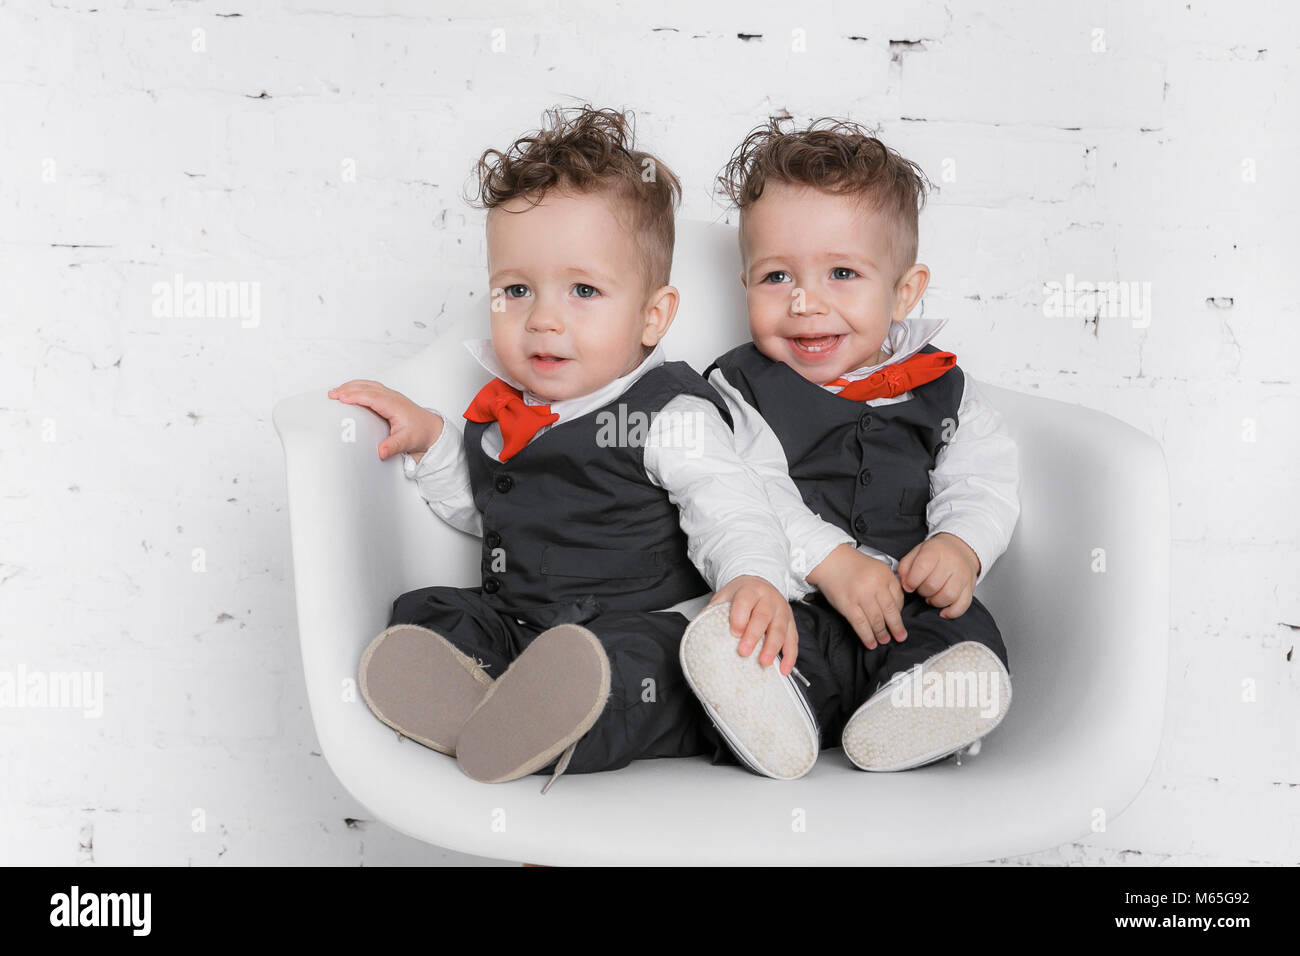 Twin baby boys Stock Photo